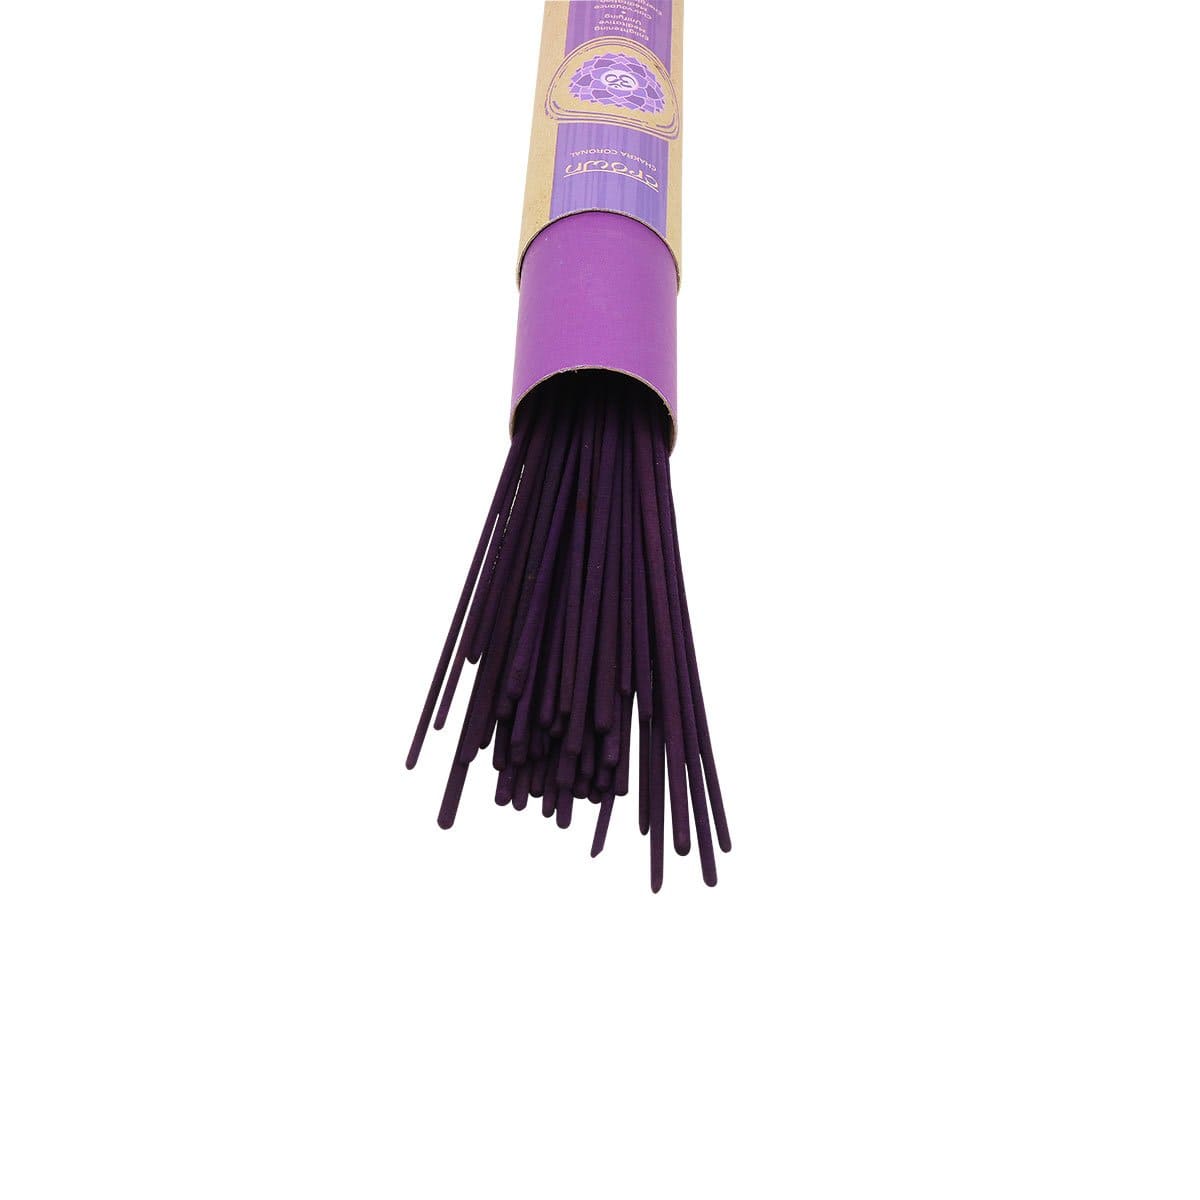 Wholesale Chakra Scents Incense Sticks Displayer of 24